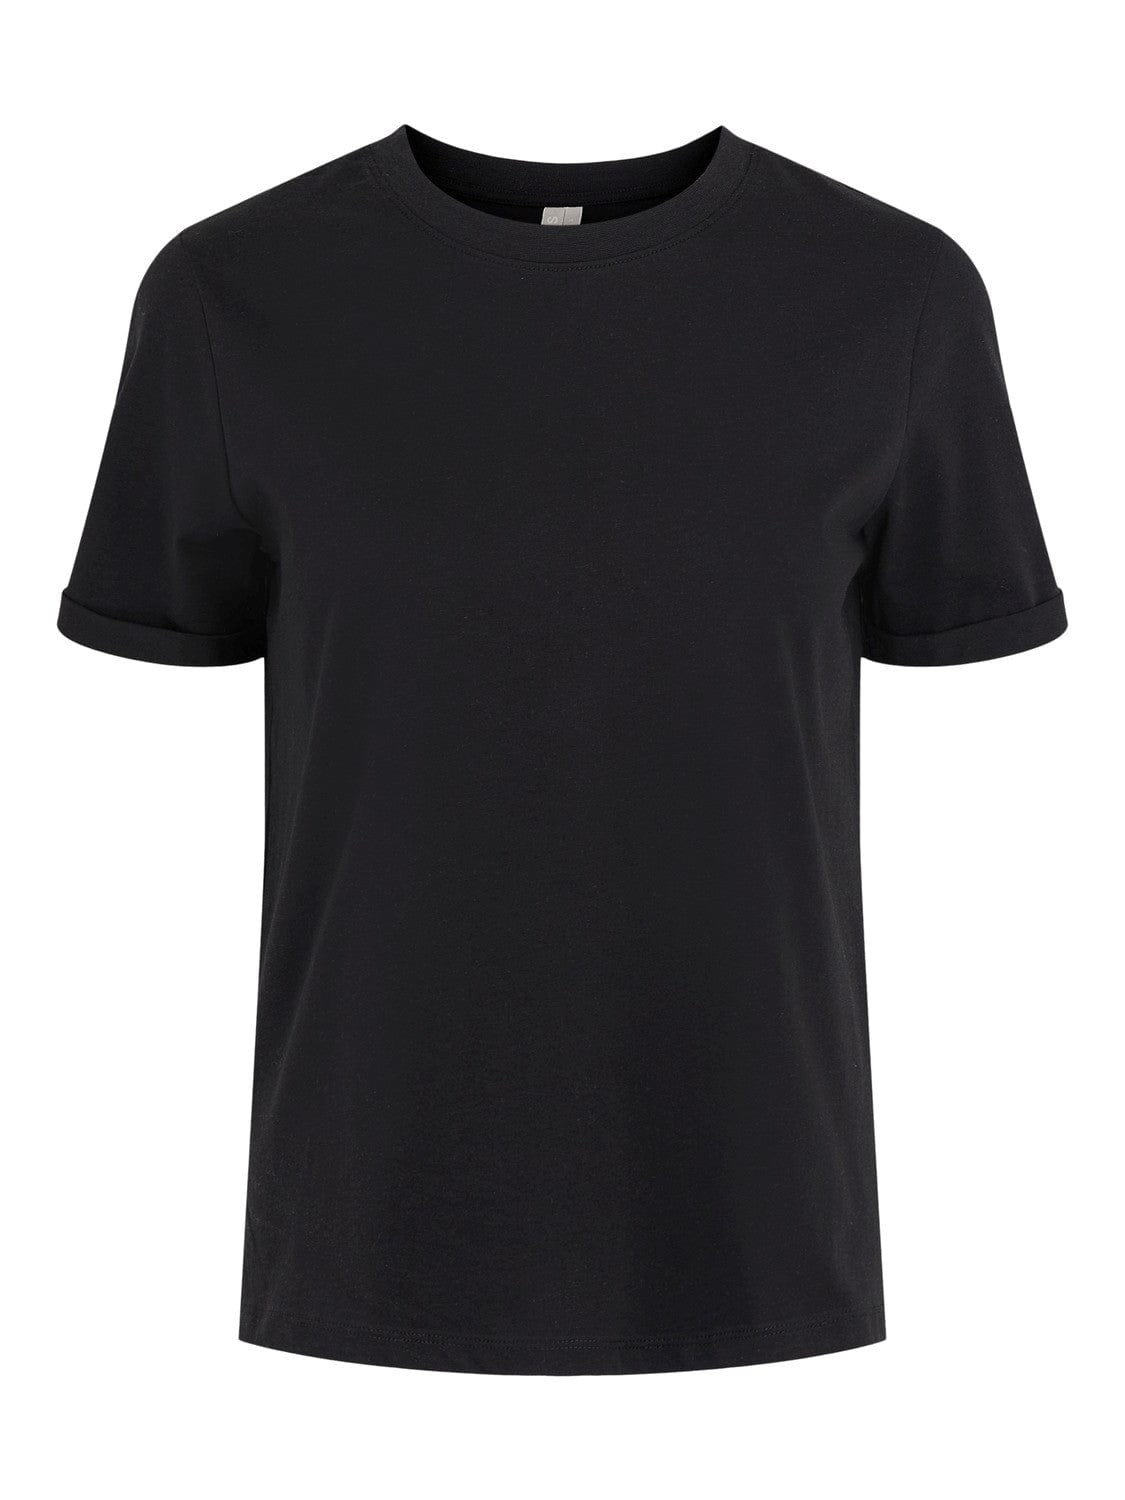 Se PIECES - Ria Oversize T-Shirt - Sort hos stilkompagniet.dk